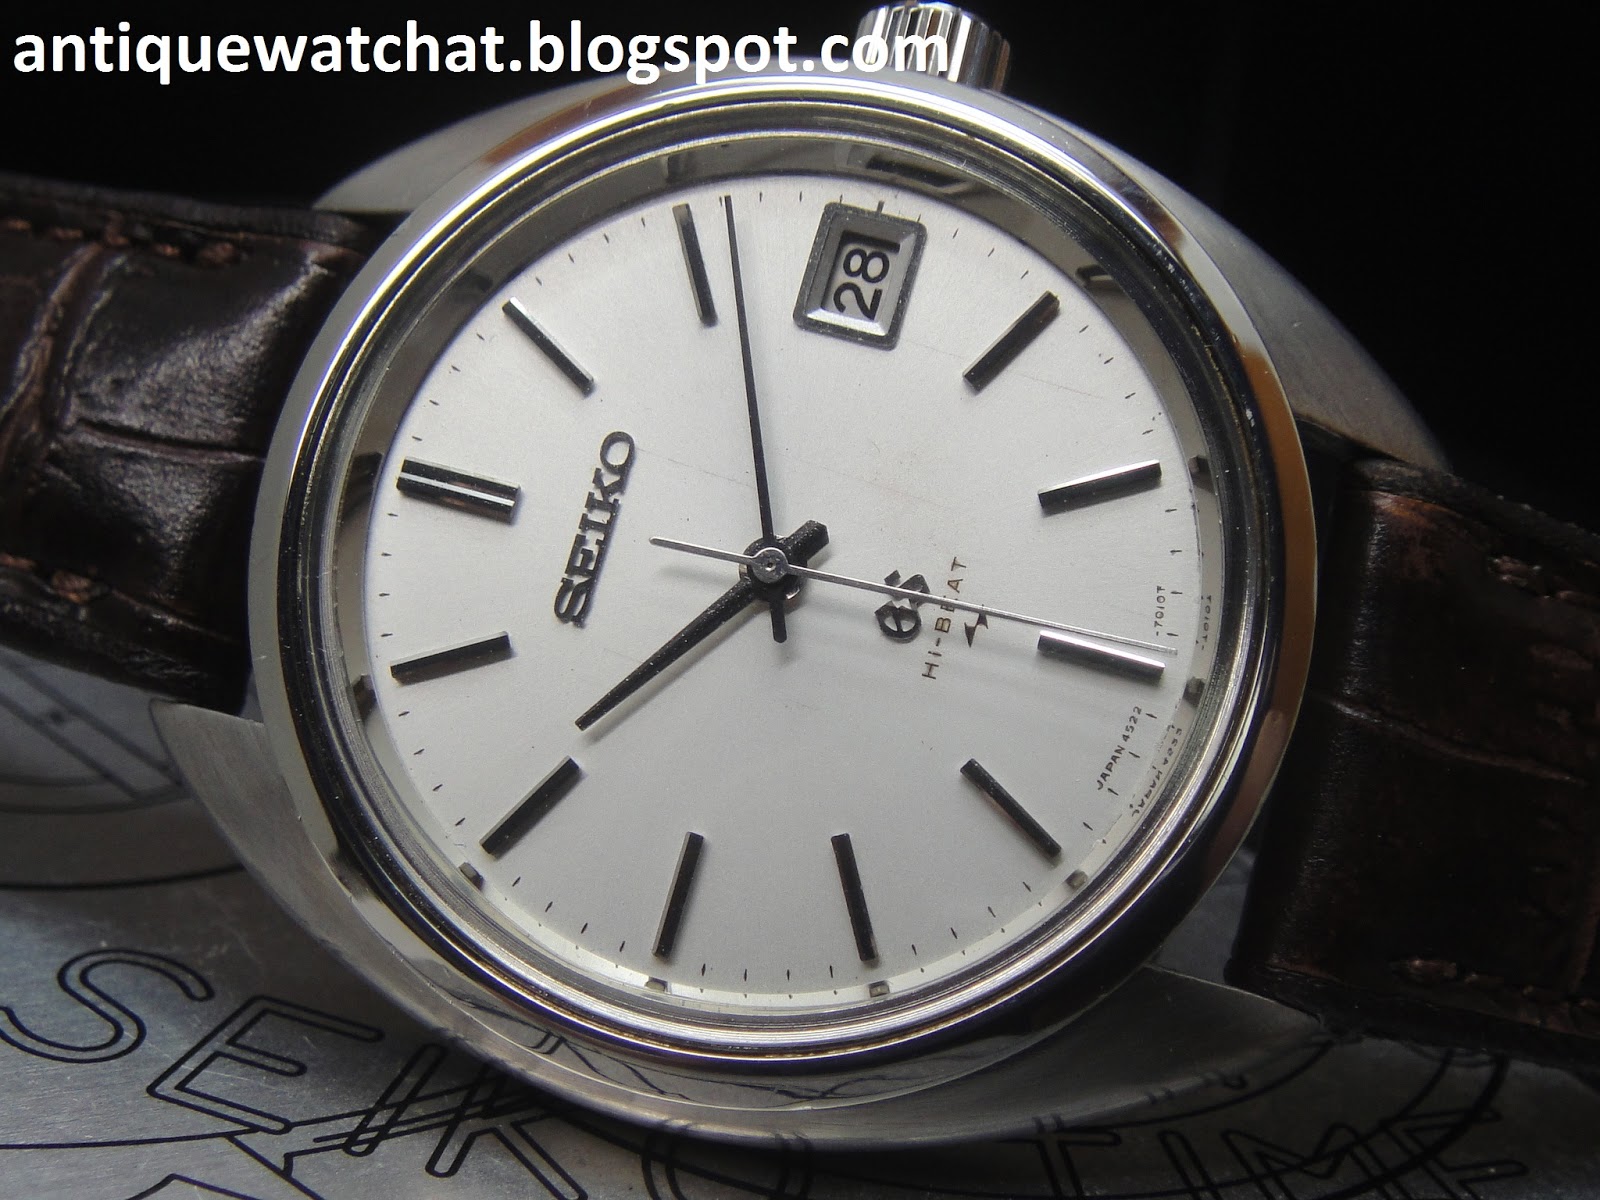 Antique Watch Bar: GRAND SEIKO 36000 HI-BEAT 4522-7010 GS11 (SOLD)